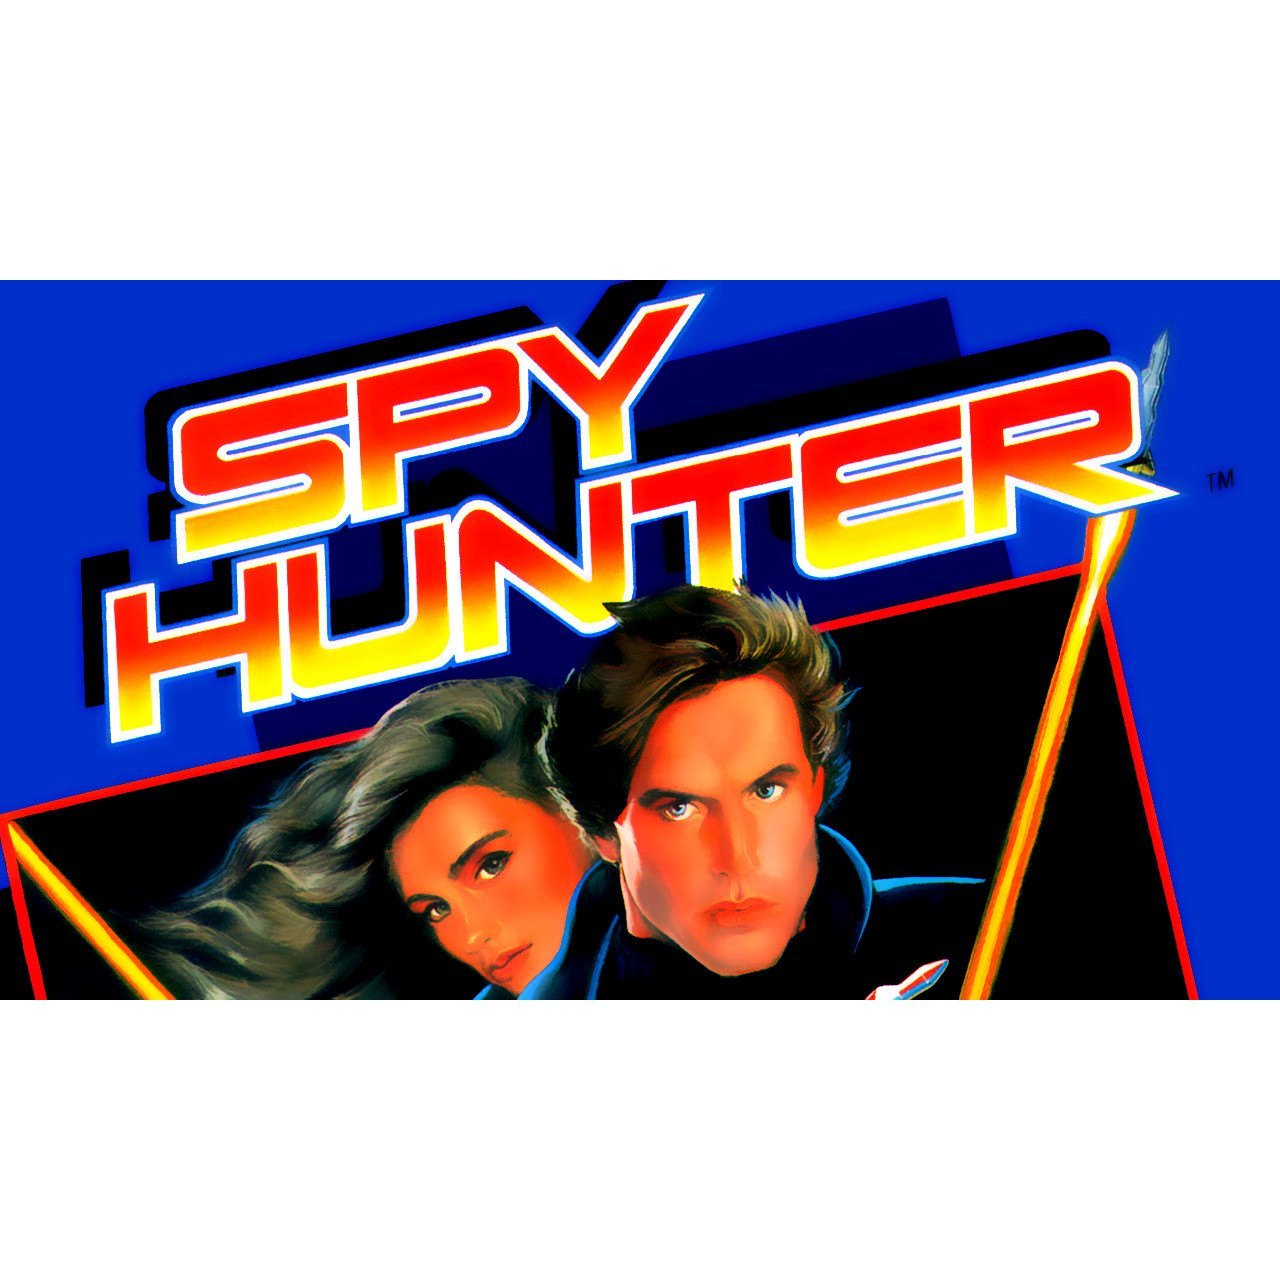 Spy Hunter NES Nintendo Game